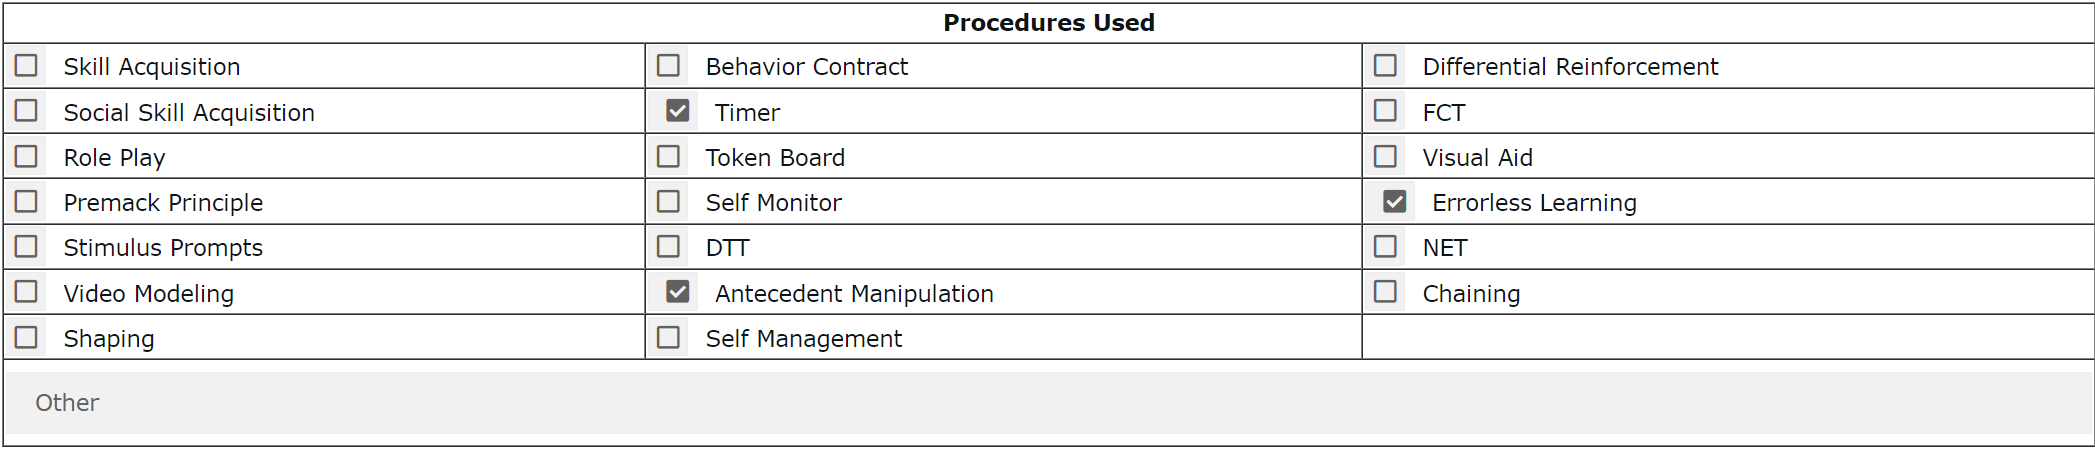 audit-readiness_procedures used